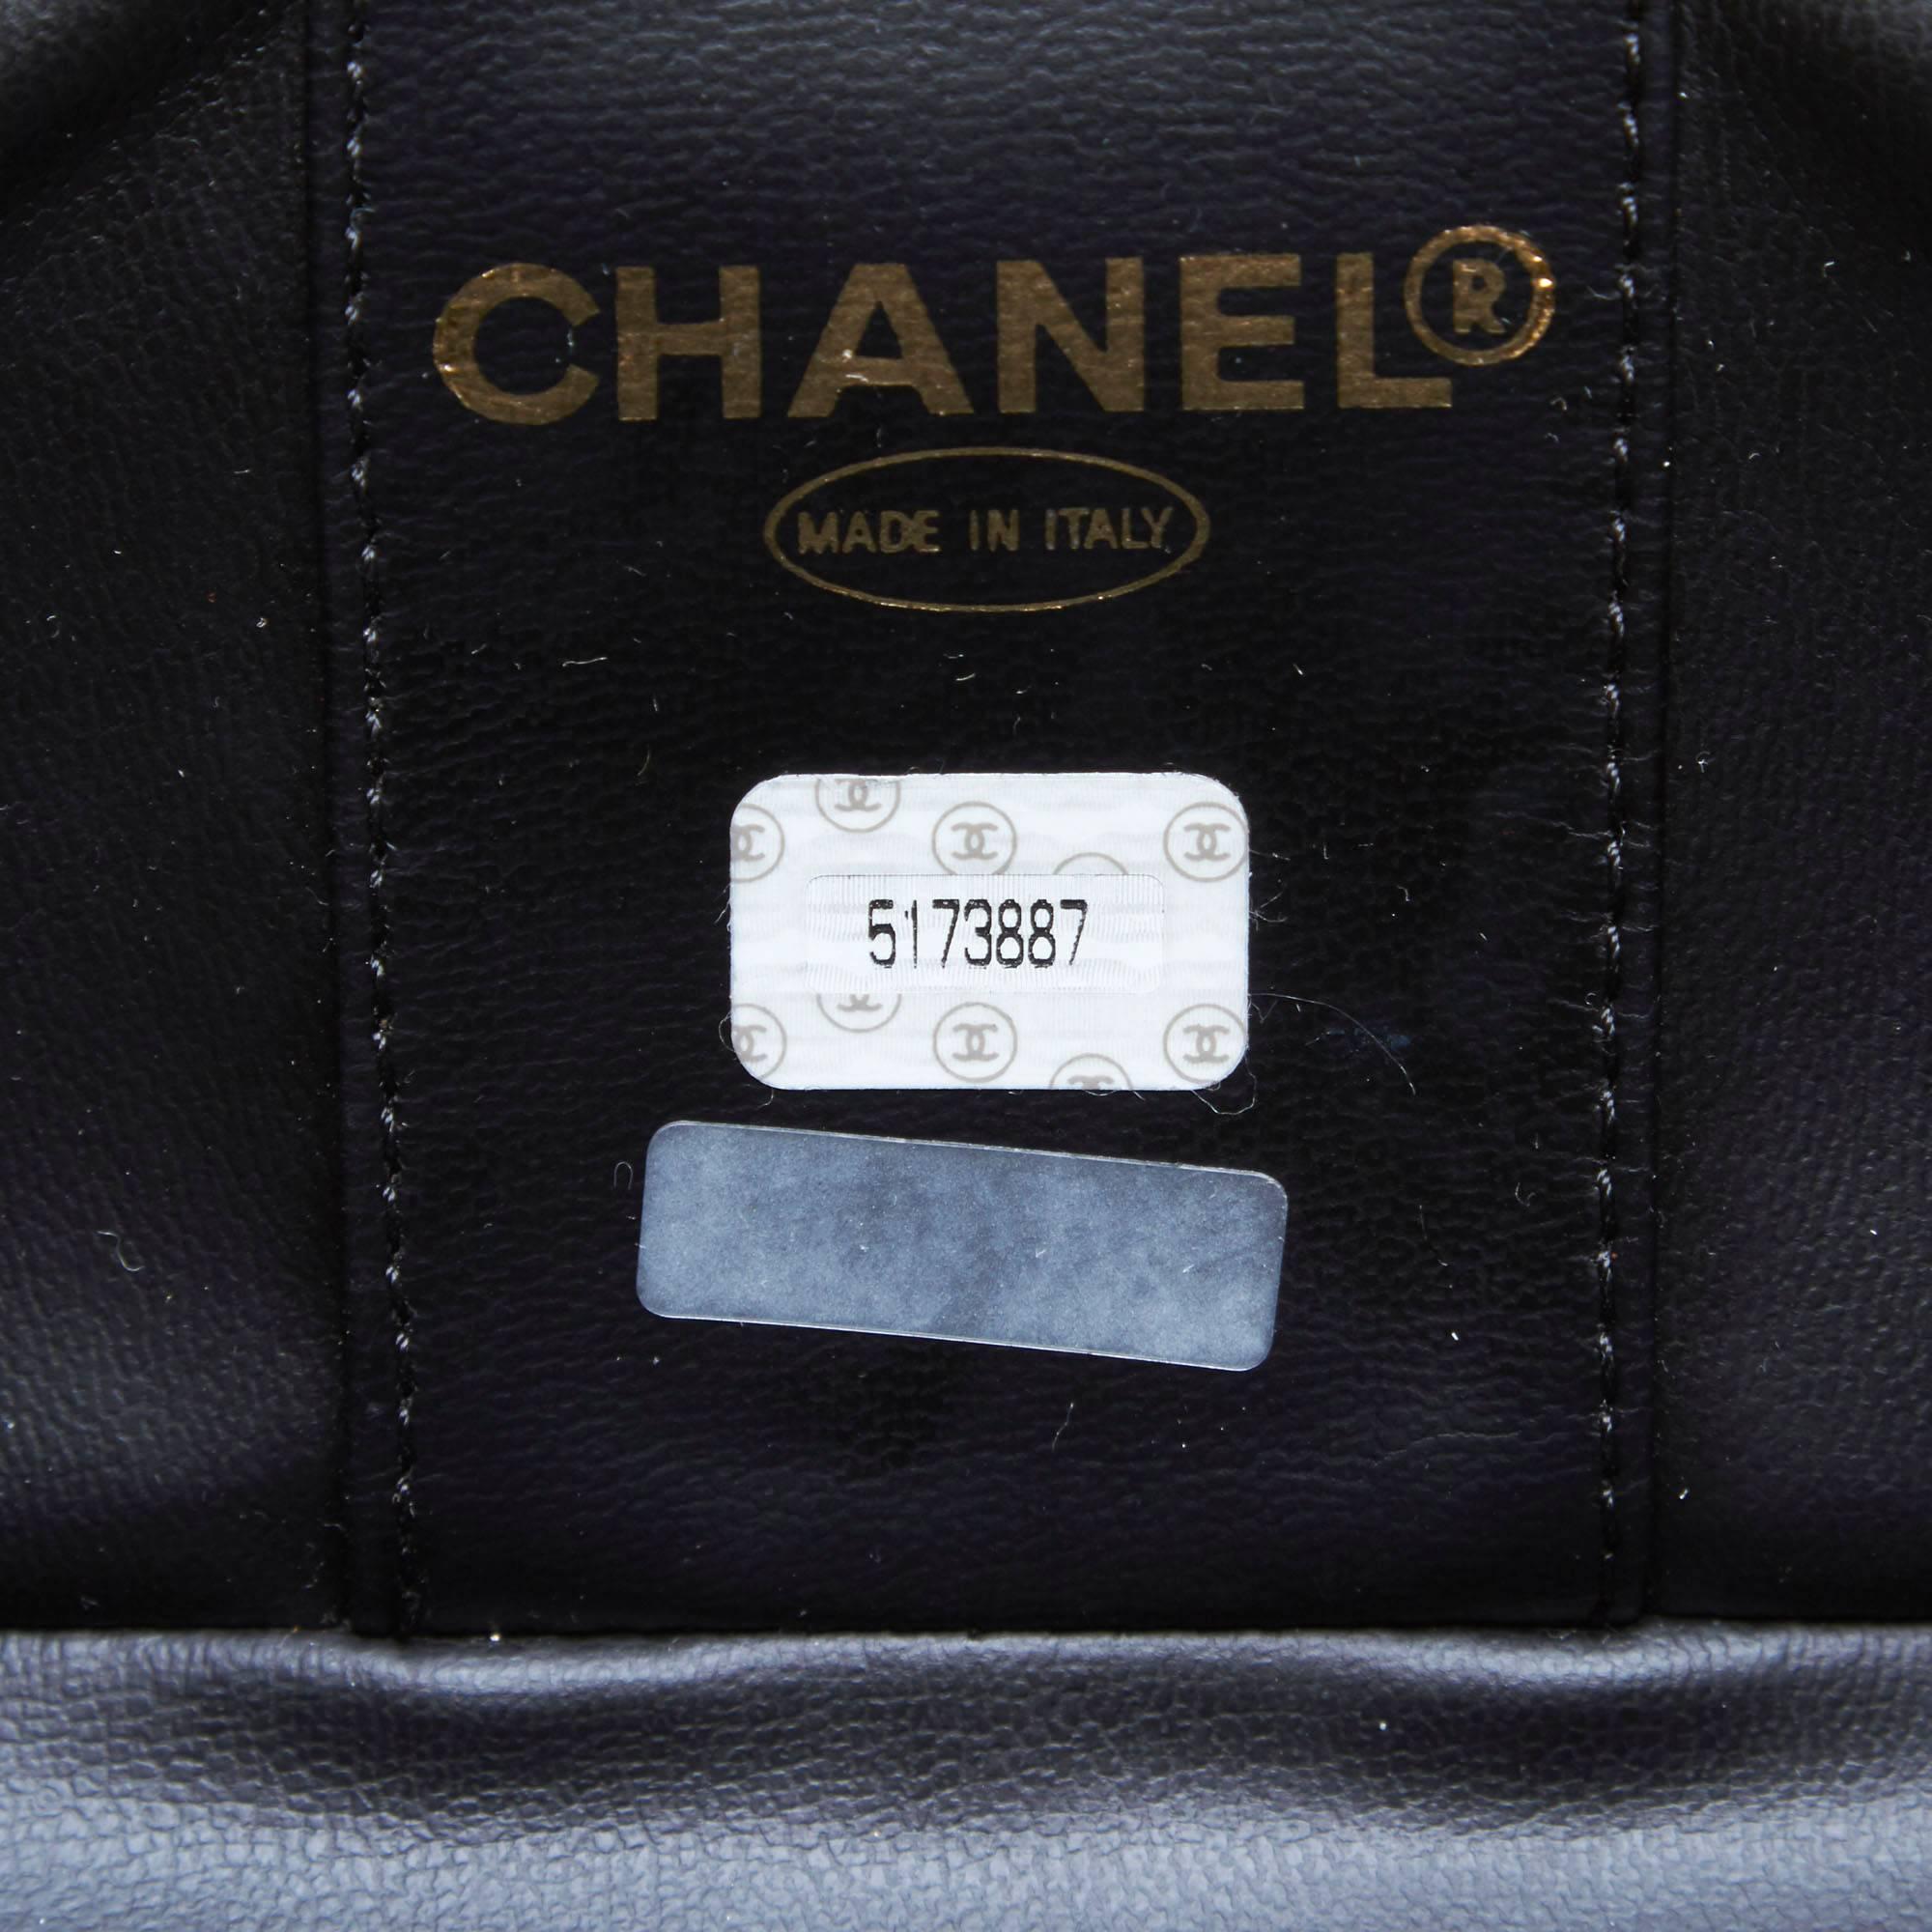 Chanel Black Patent Leather Vanity Bag 3